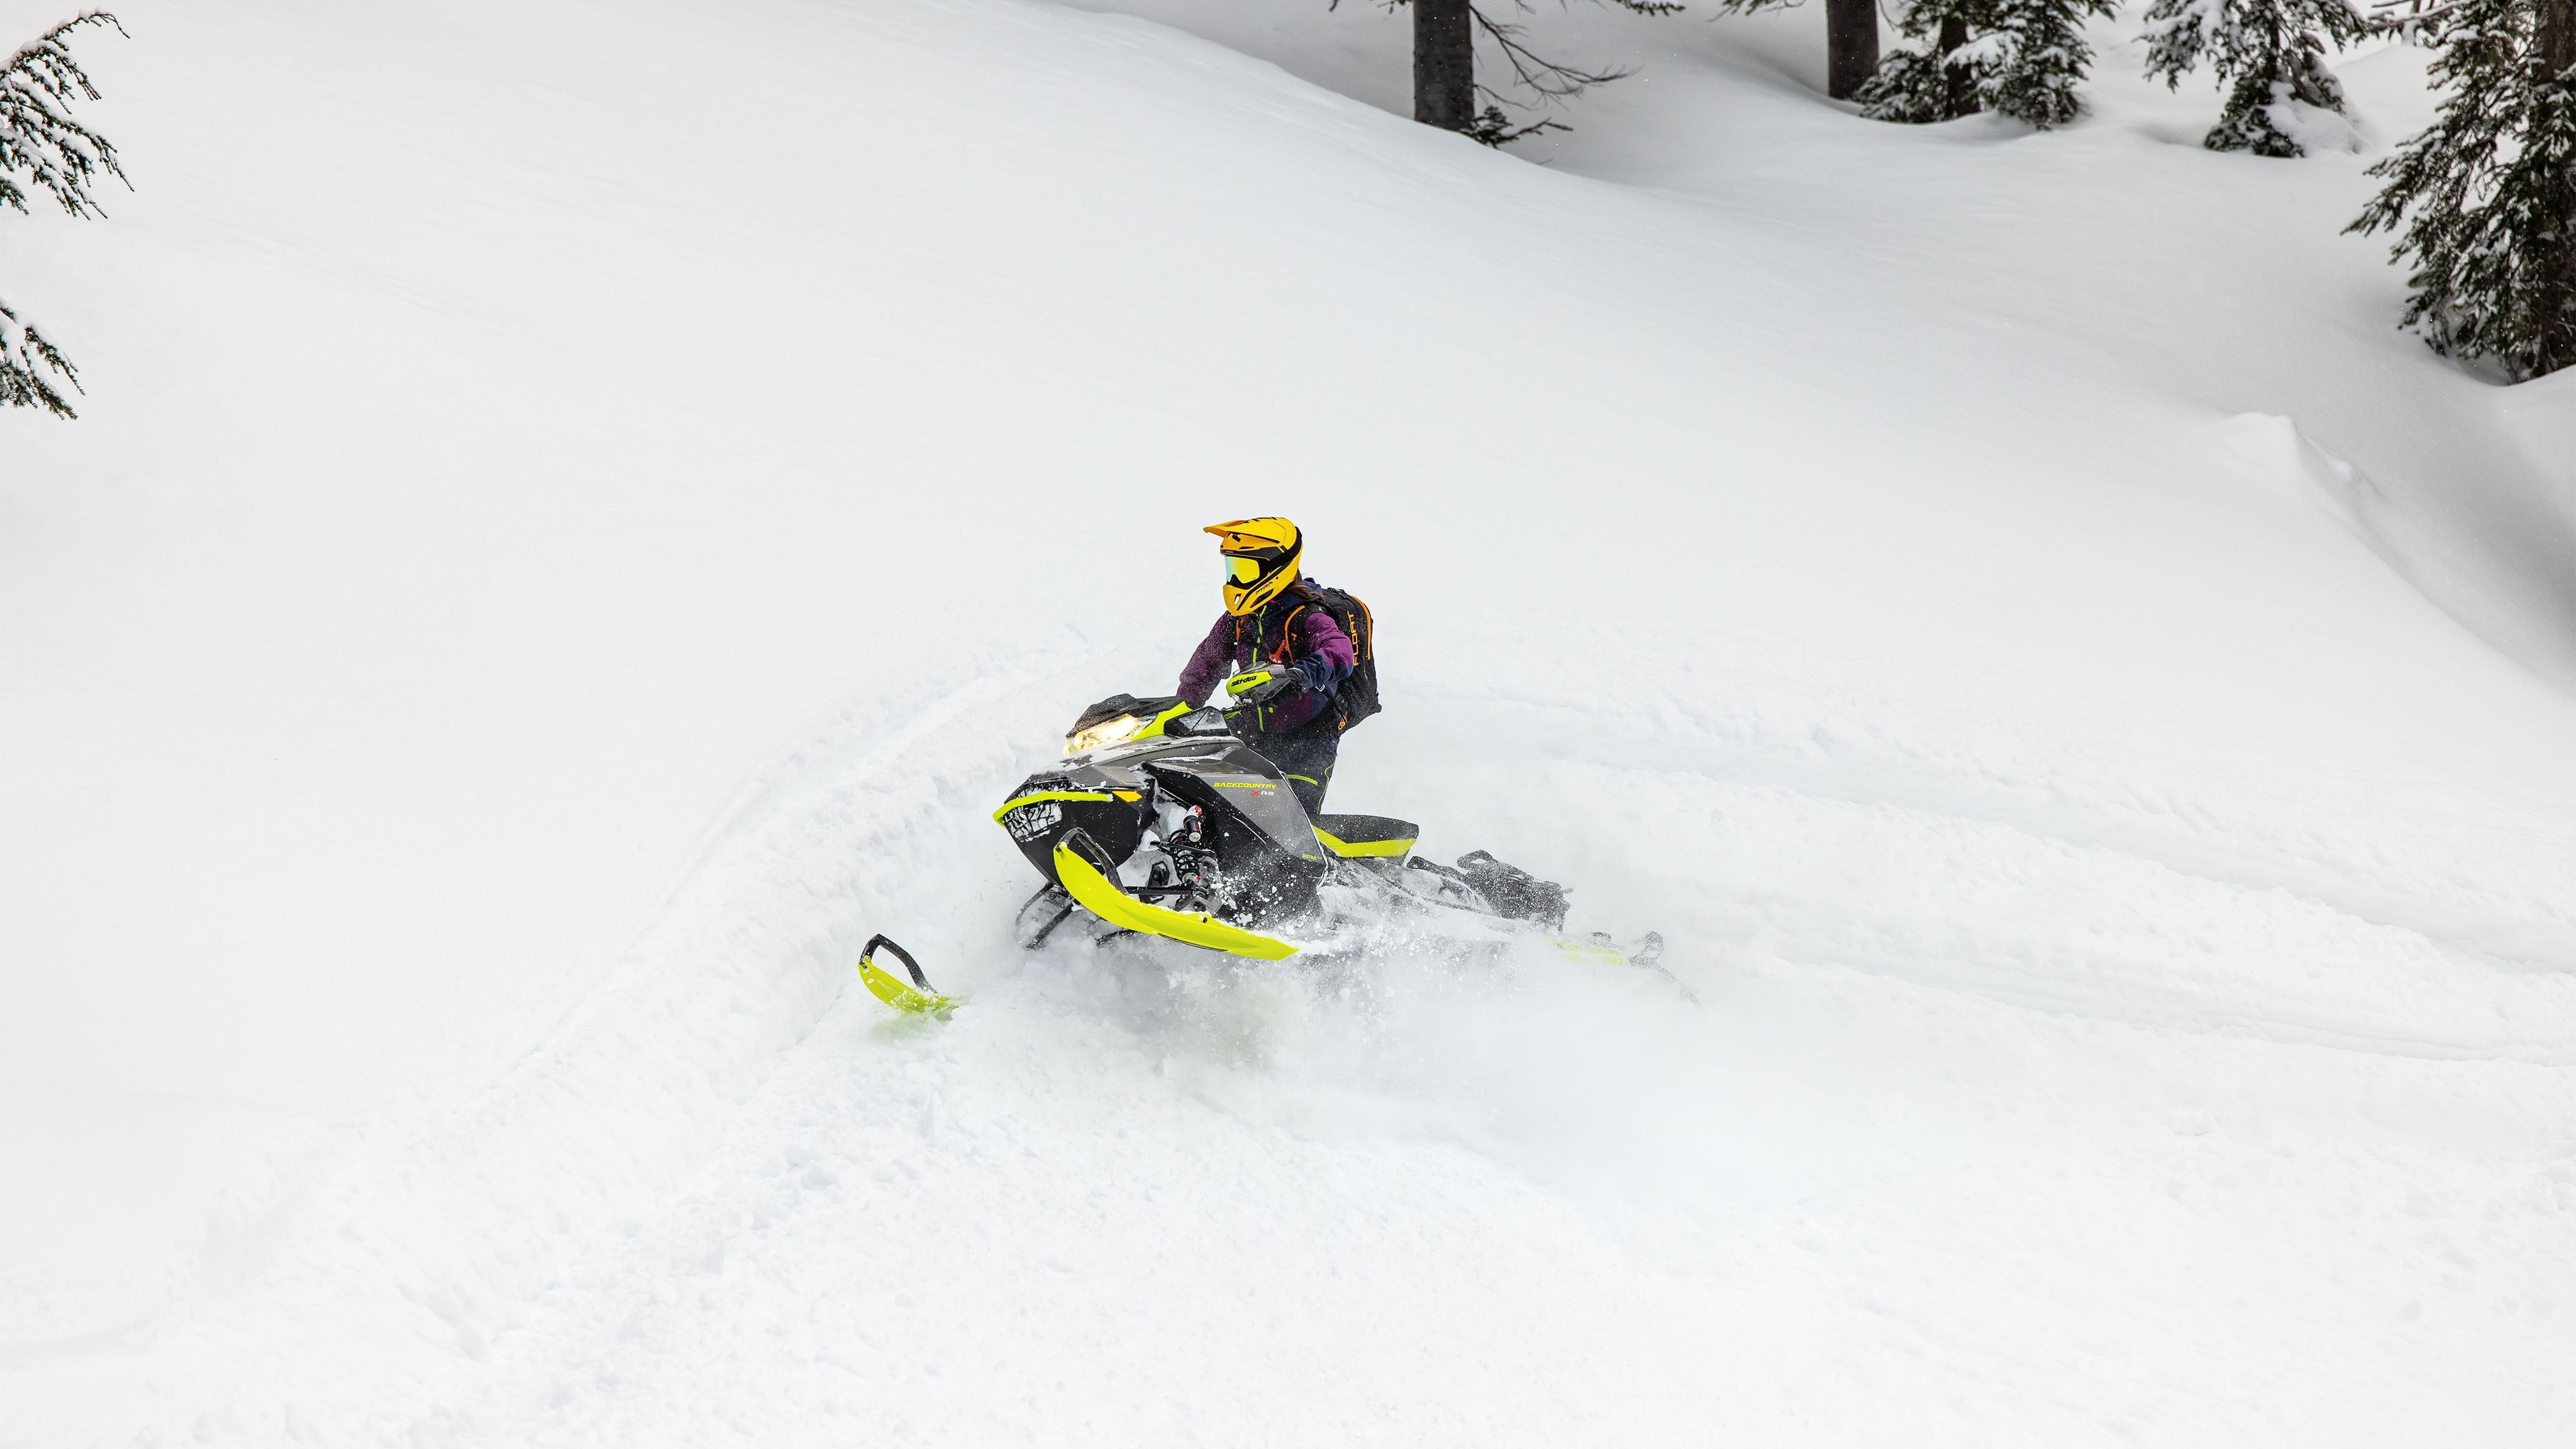 " Homme pilotant dans la neige profonde avec une motoneige Hybride Ski-Doo "